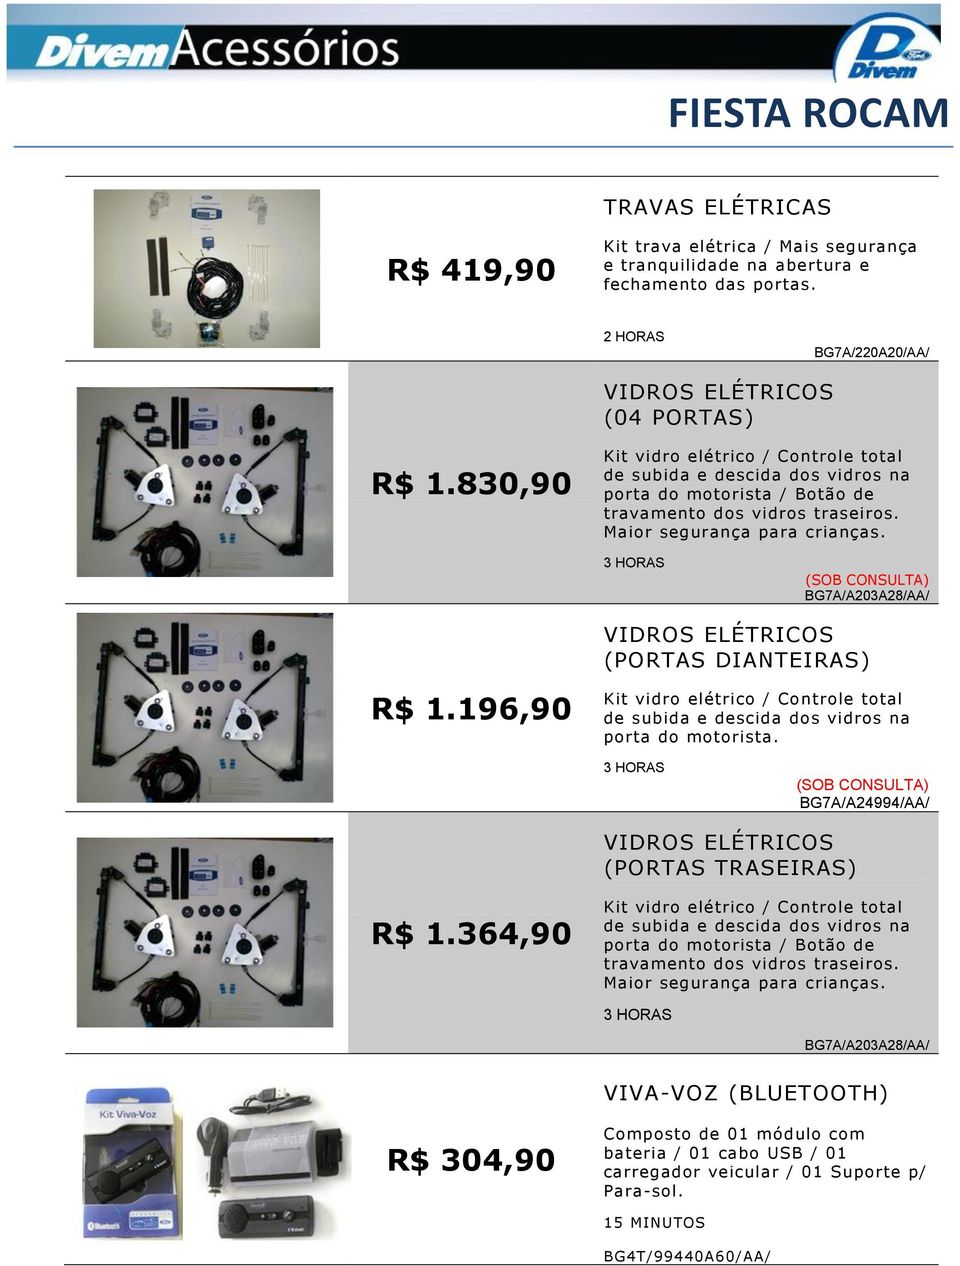 3 HORAS BG7A/A203A28/AA/ VIDROS ELÉTRICOS (PORTAS DIANTEIRAS) R$ 1.196,90 Kit vidro elétrico / Controle total de subida e descida dos vidros na porta do motorista.